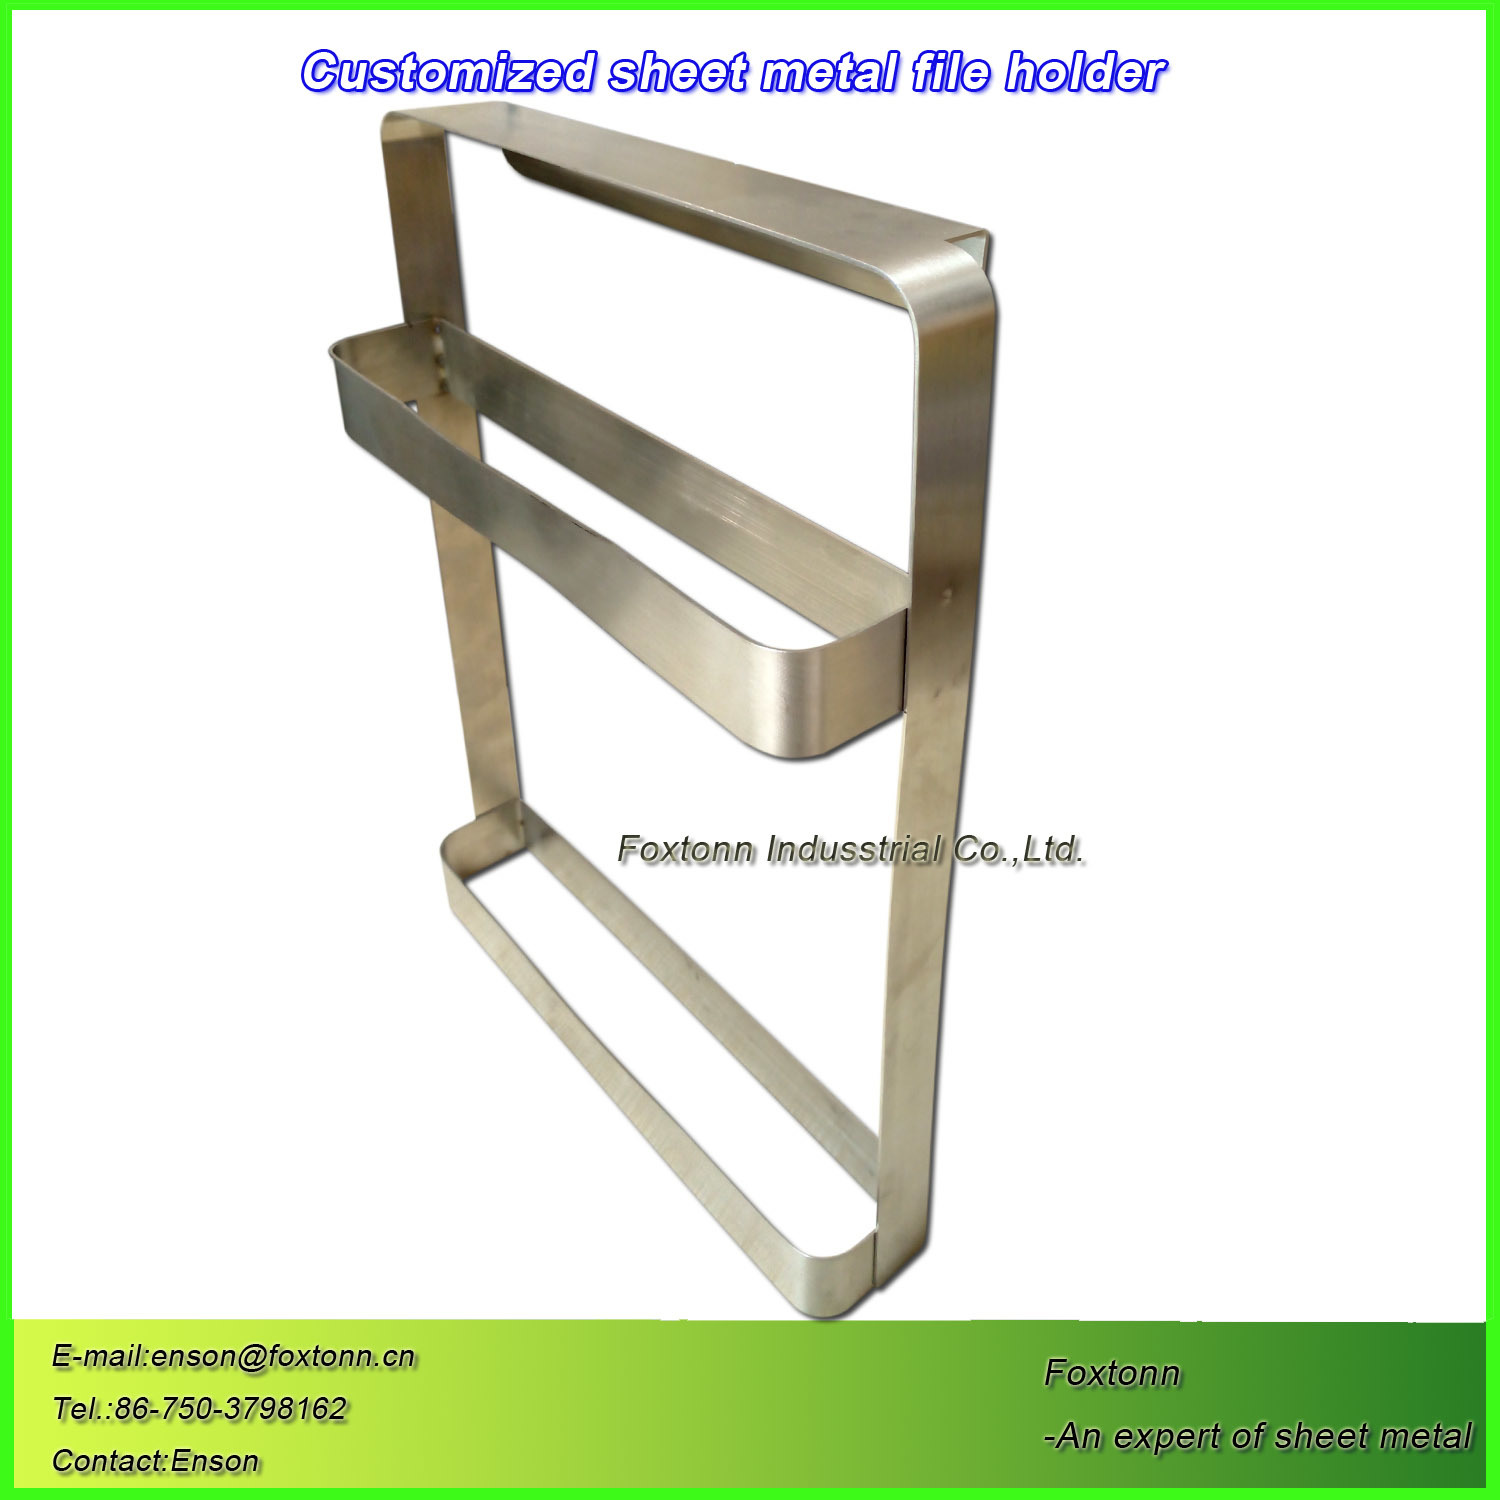 /proimages/2f0j00qTuUtGblVMok/stainless-steel-hanging-file-holder-sheet-metal-welding-parts.jpg